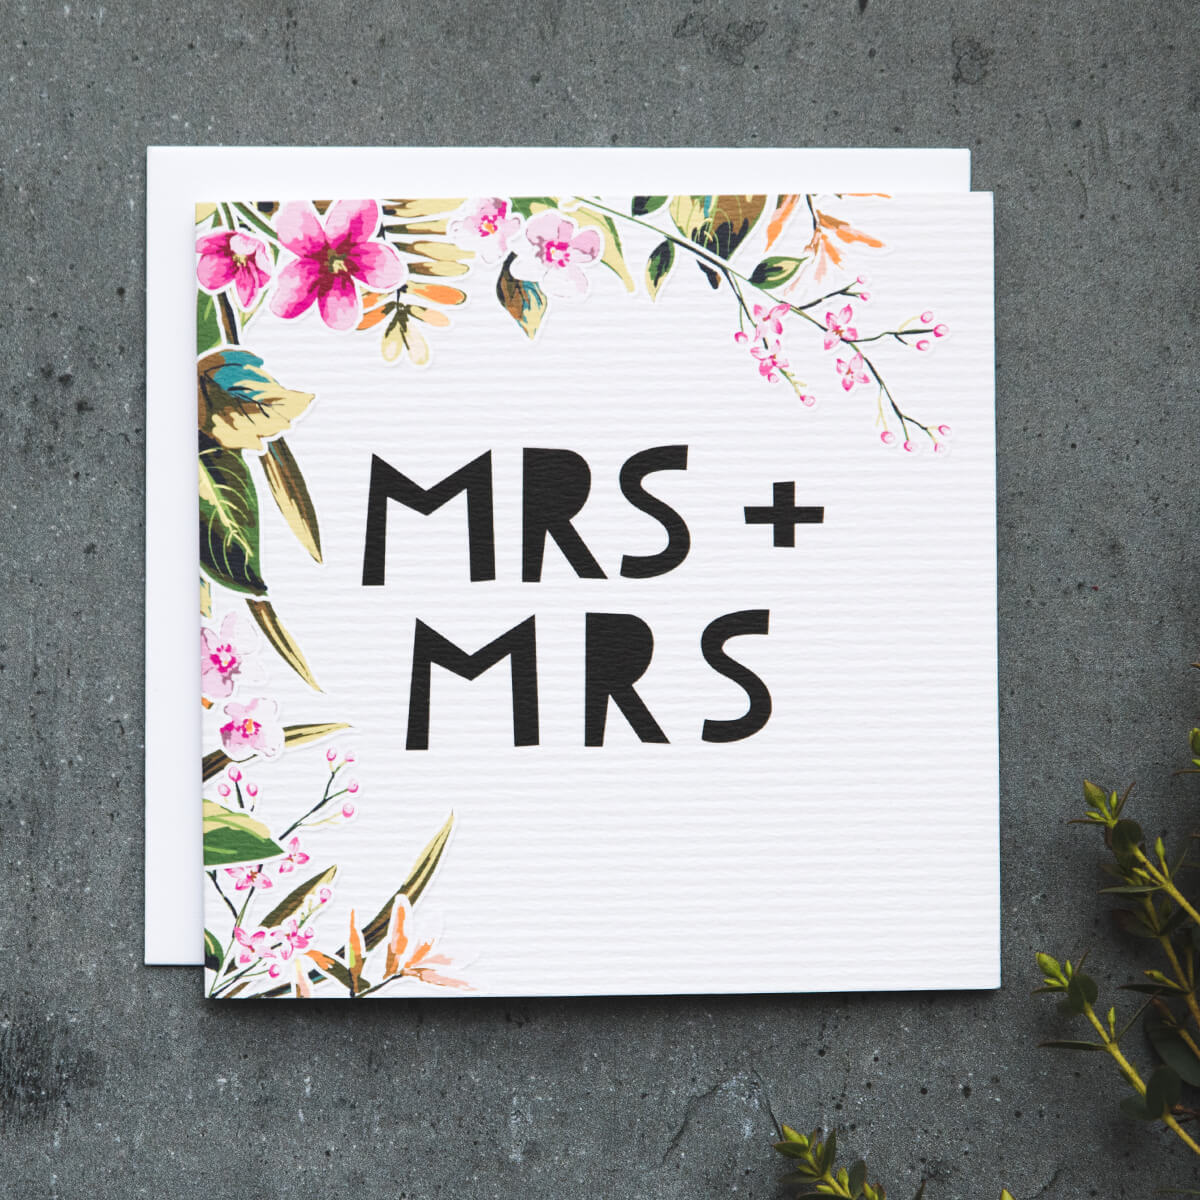 &#39;Mrs + Mrs&#39; Gay Wedding Card - I am Nat Ltd - Greeting Card